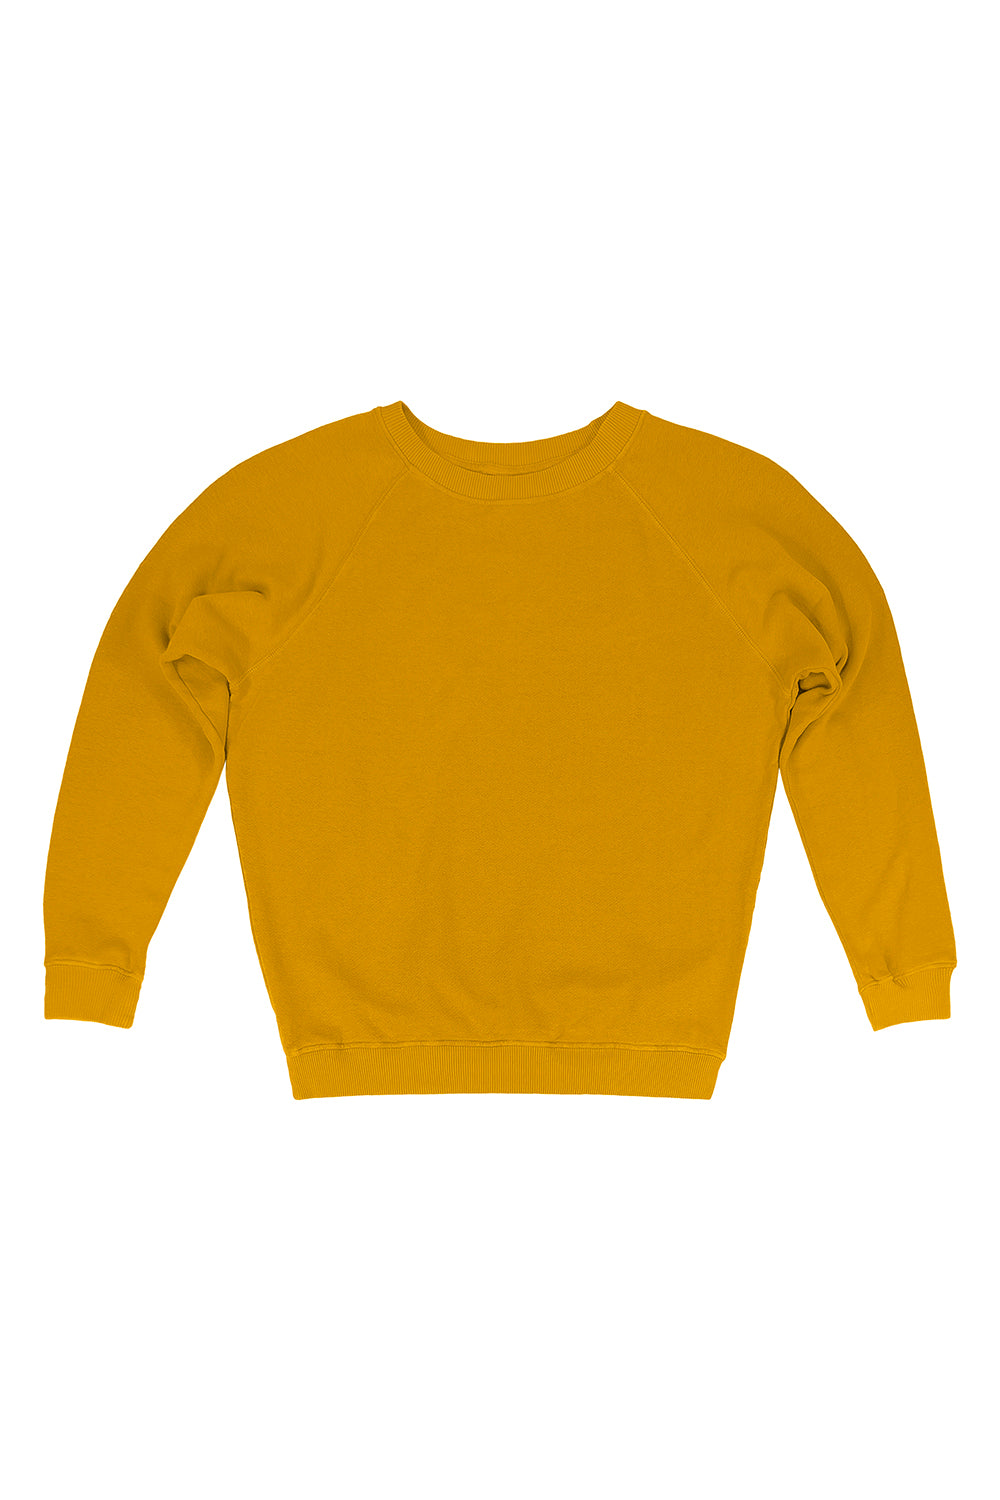 Bonfire Raglan Sweatshirt - Sale Colors | Jungmaven Hemp Clothing & Accessories / Color: Spicy Mustard